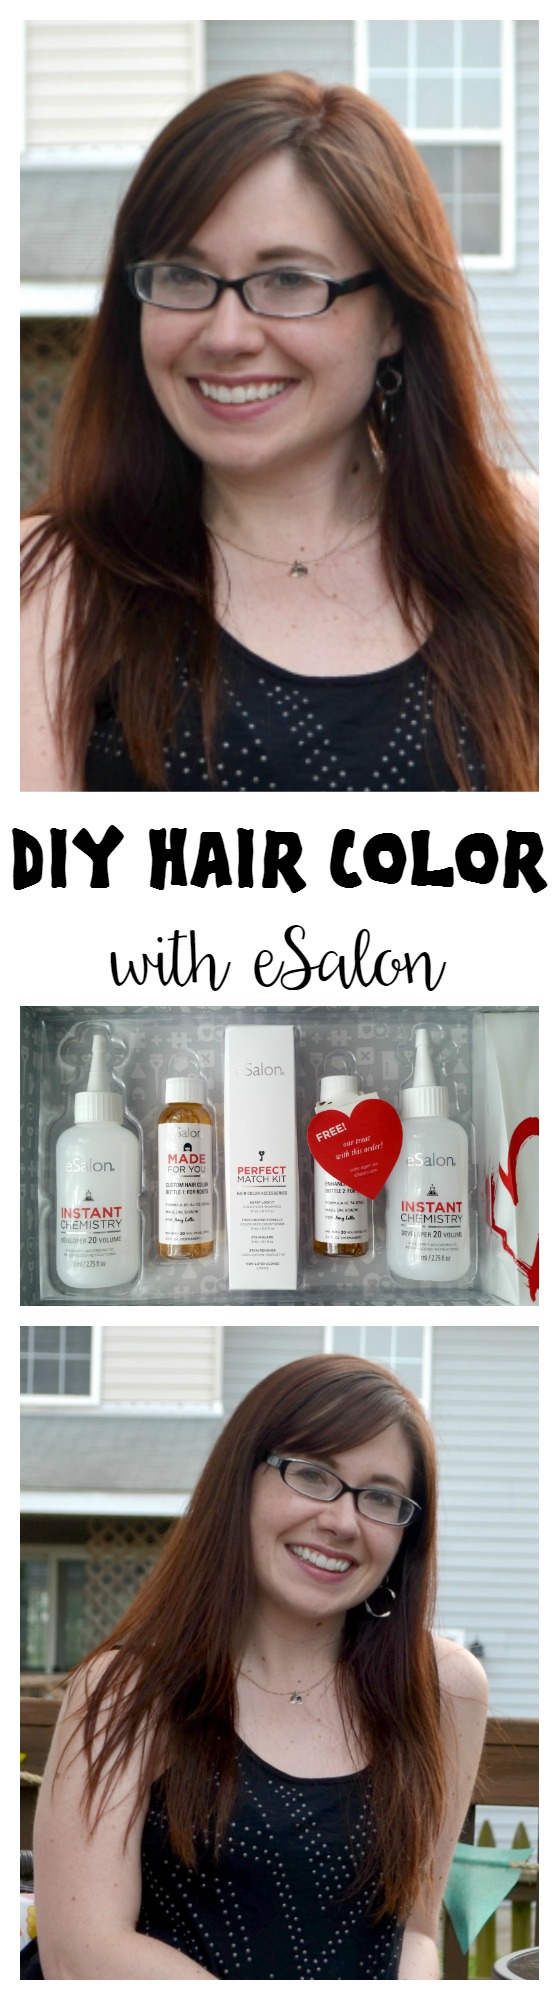 DIY Hair Color with eSalon